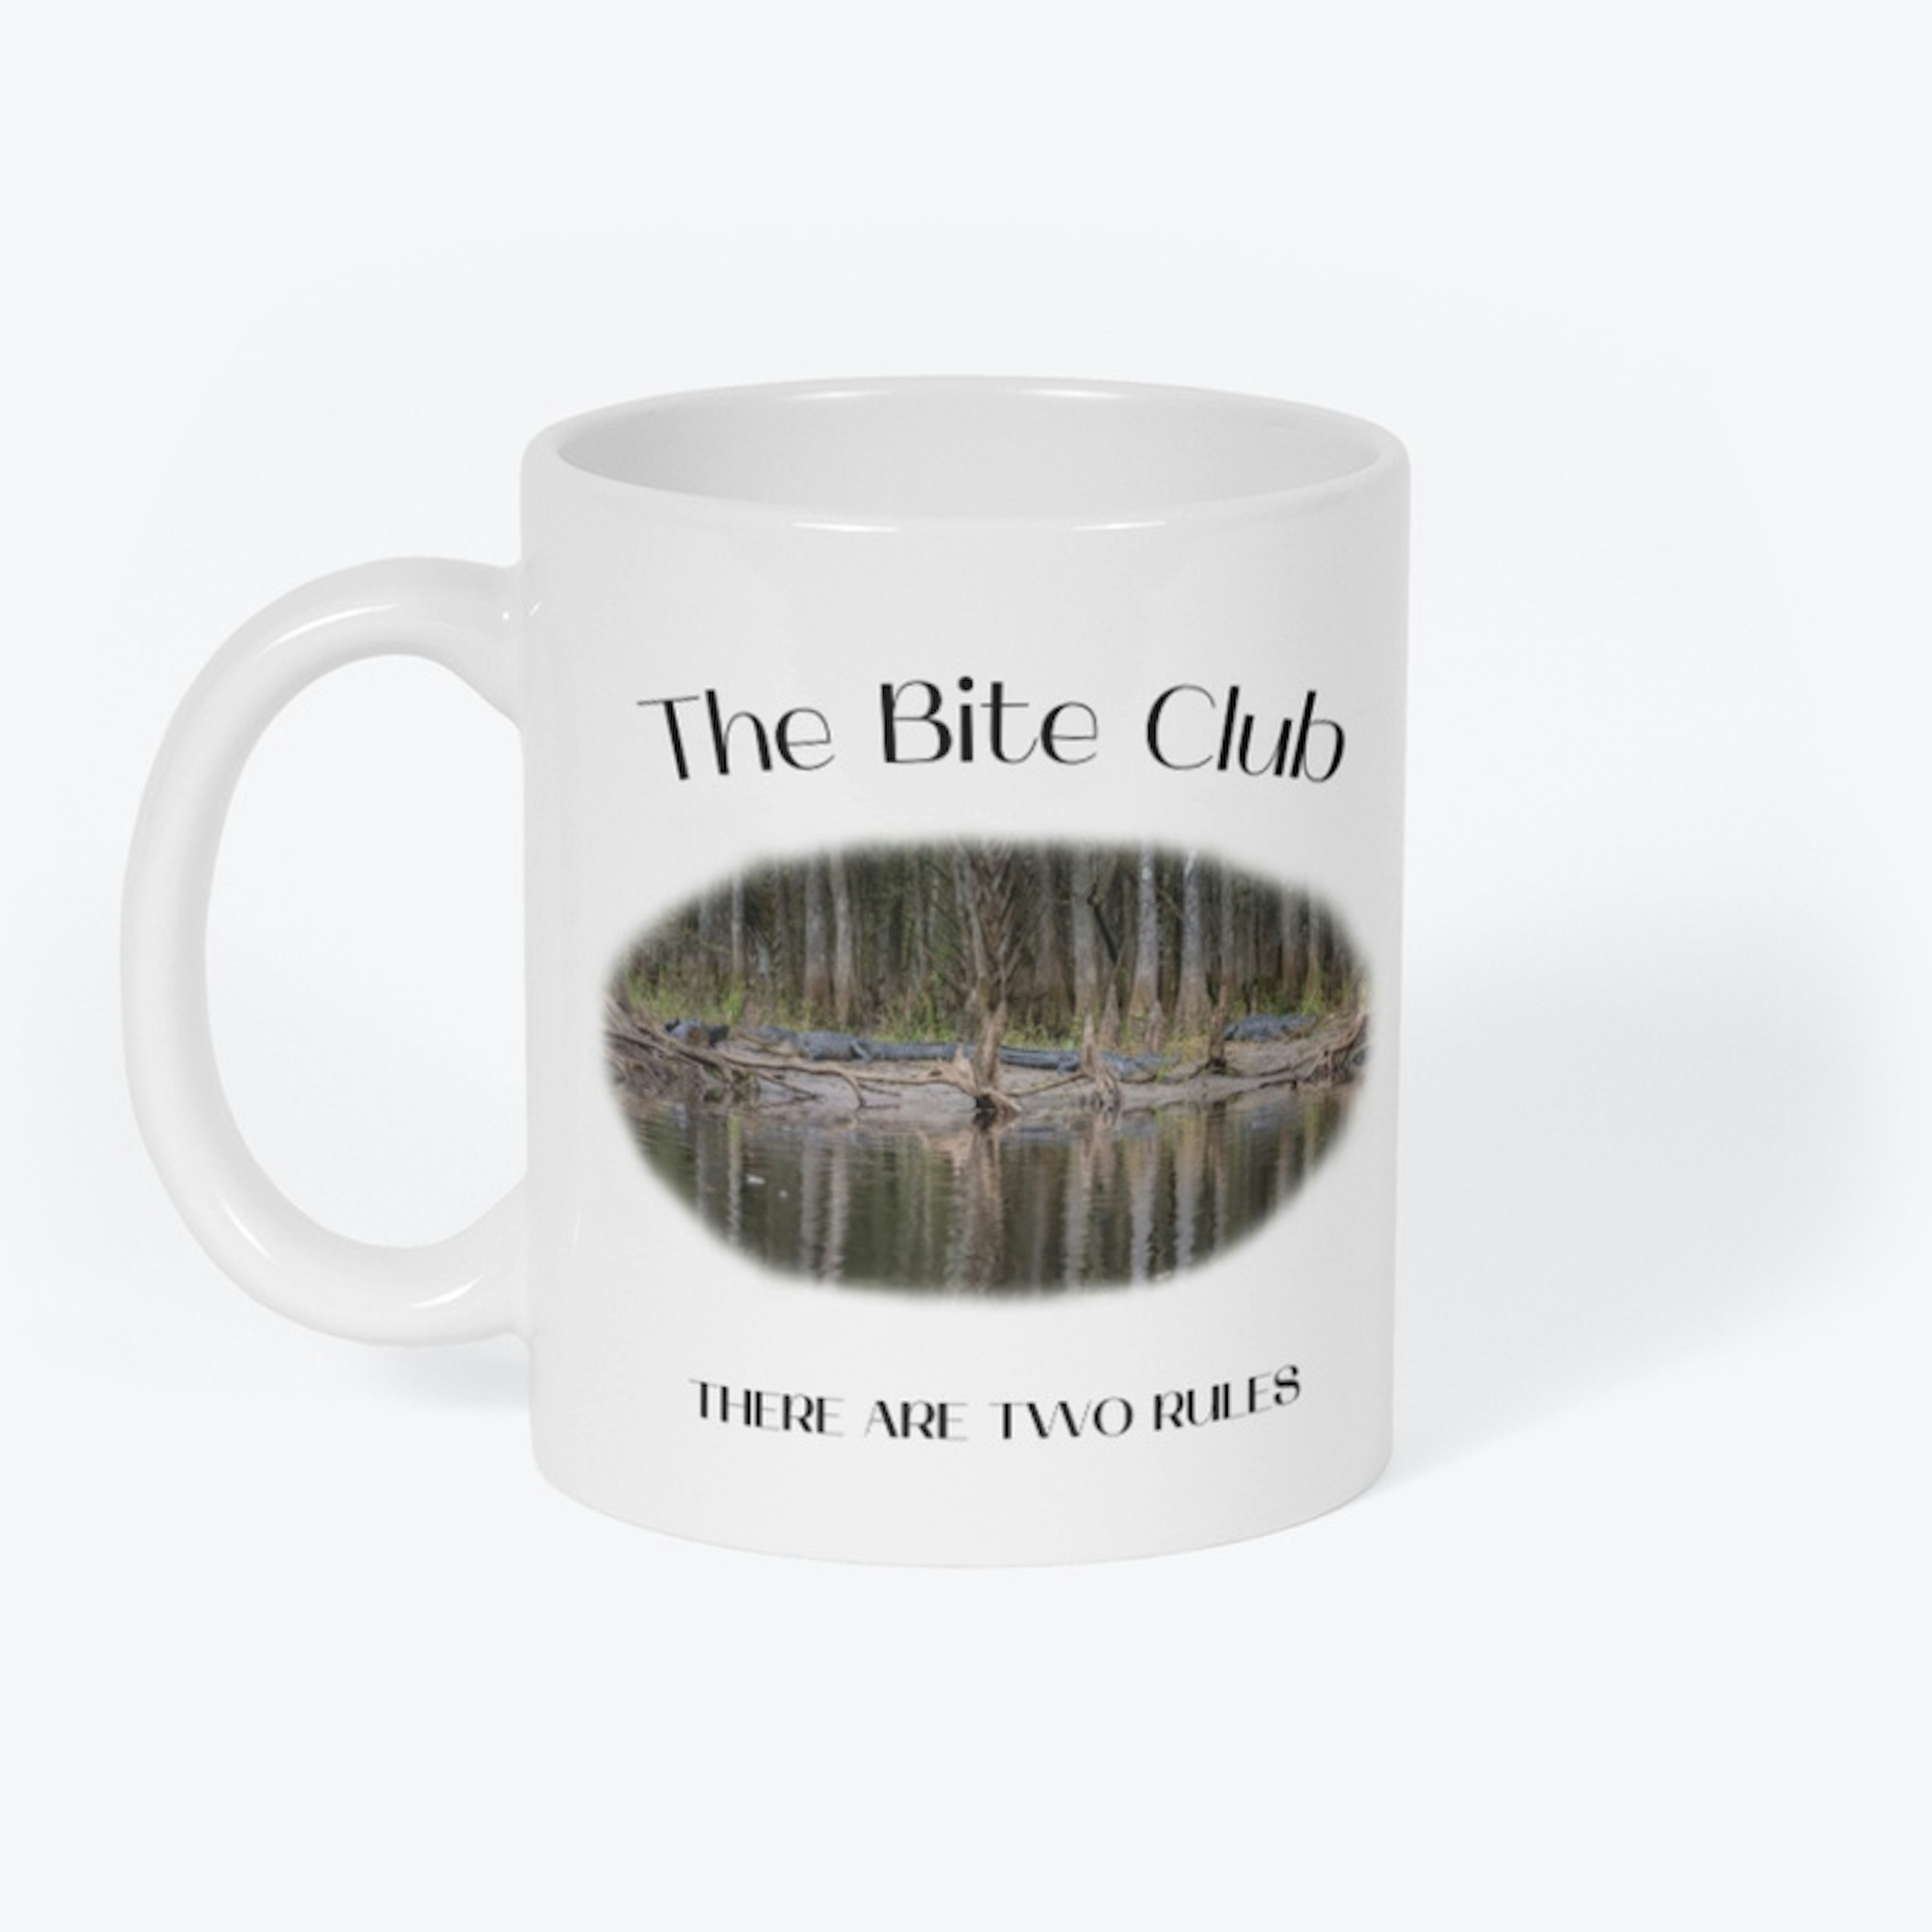 The Bite Club